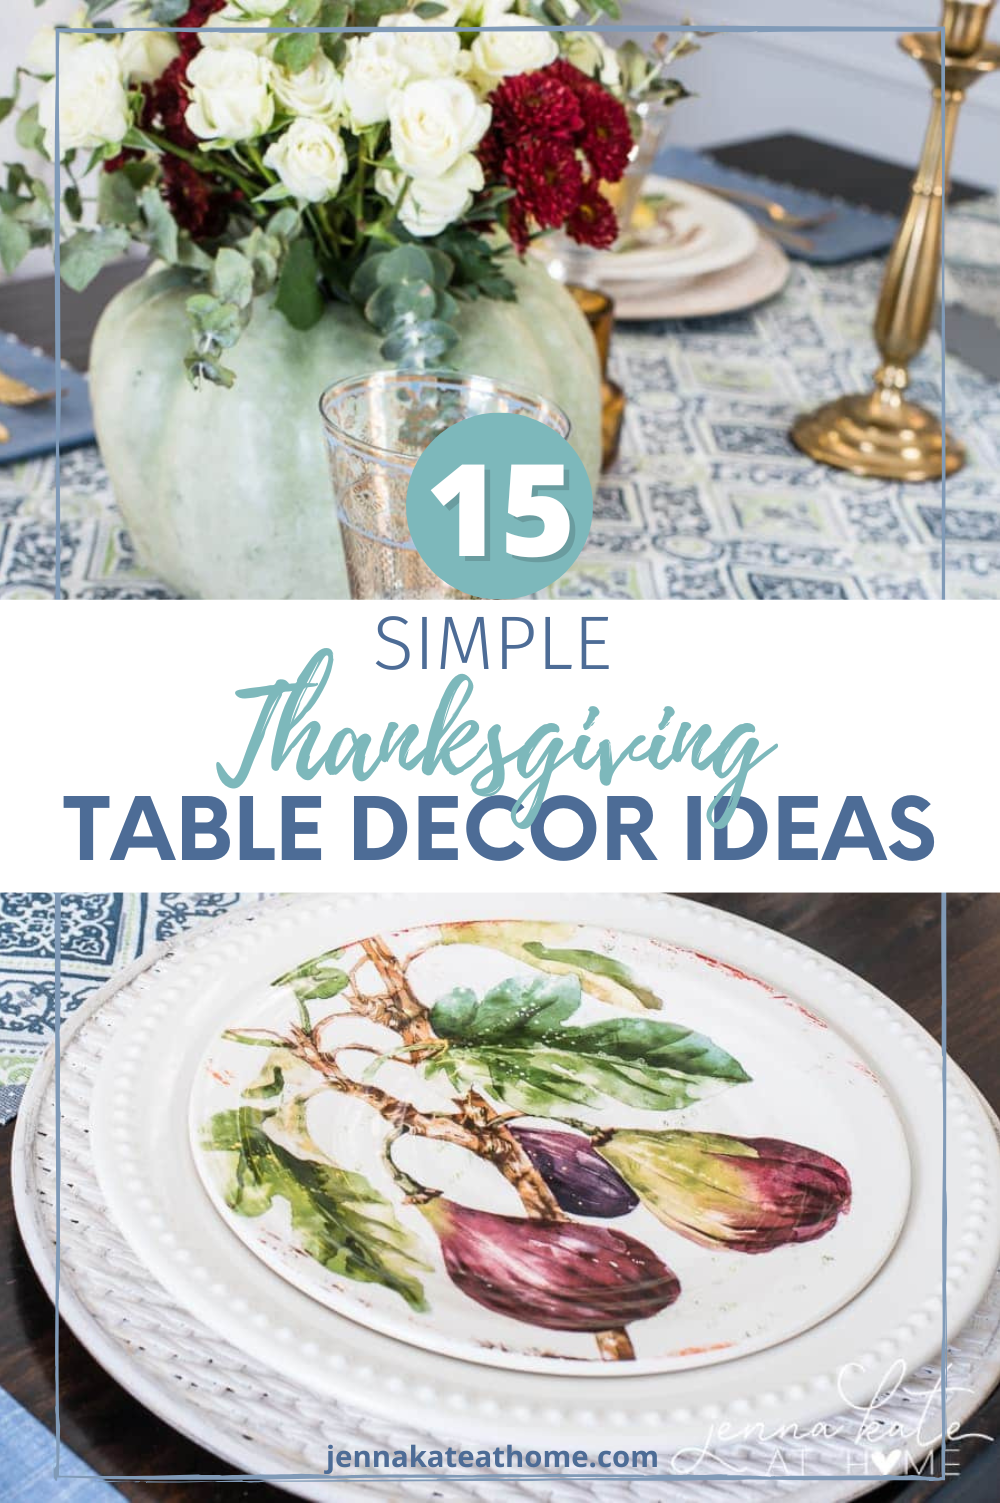 15 simple Thanksgiving Table decor ideas